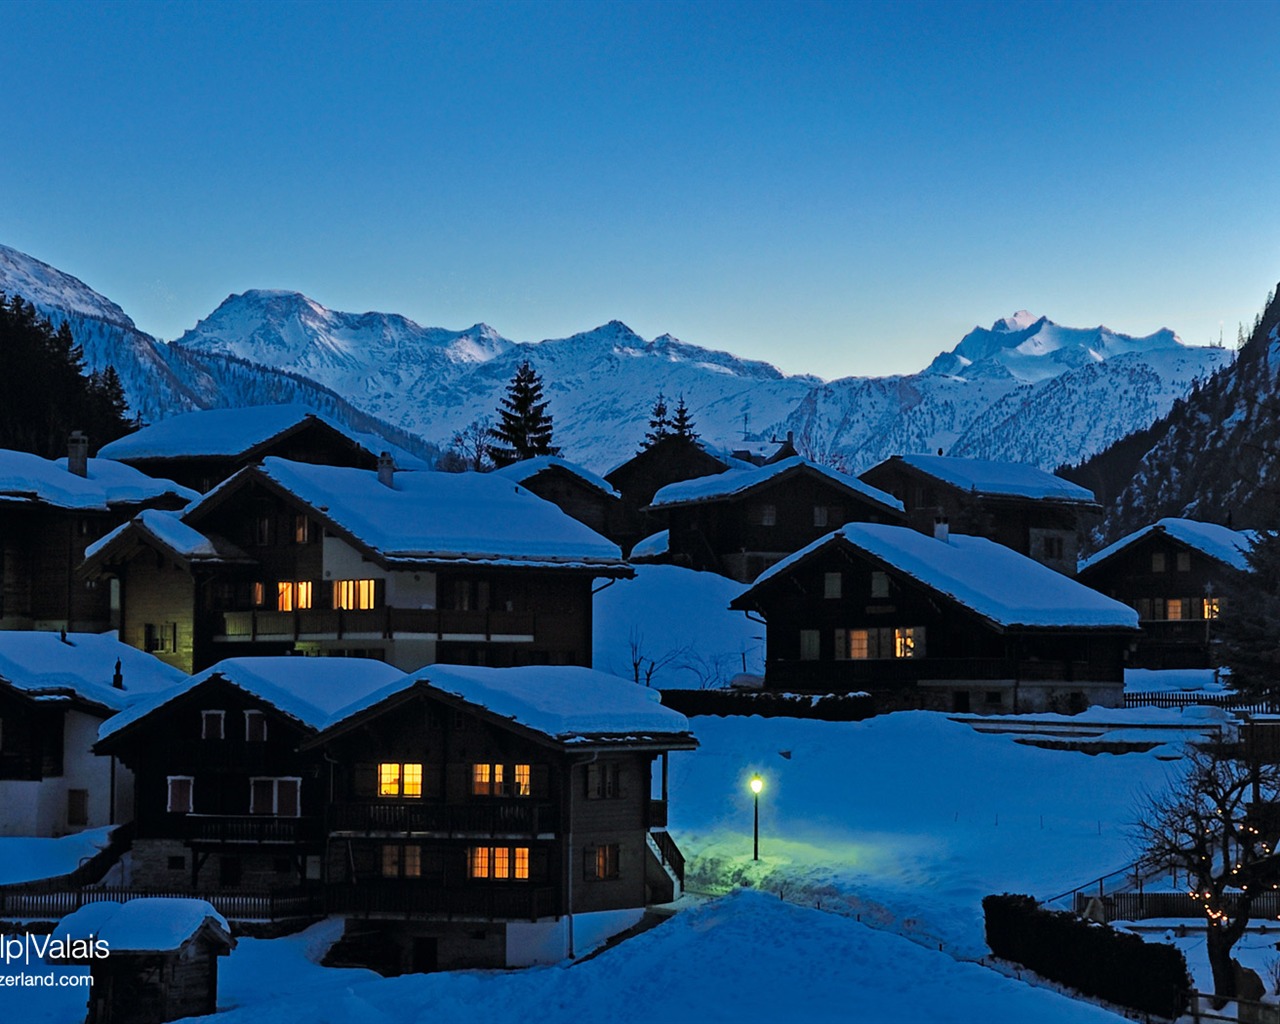 Swiss fond d'écran de neige en hiver #22 - 1280x1024